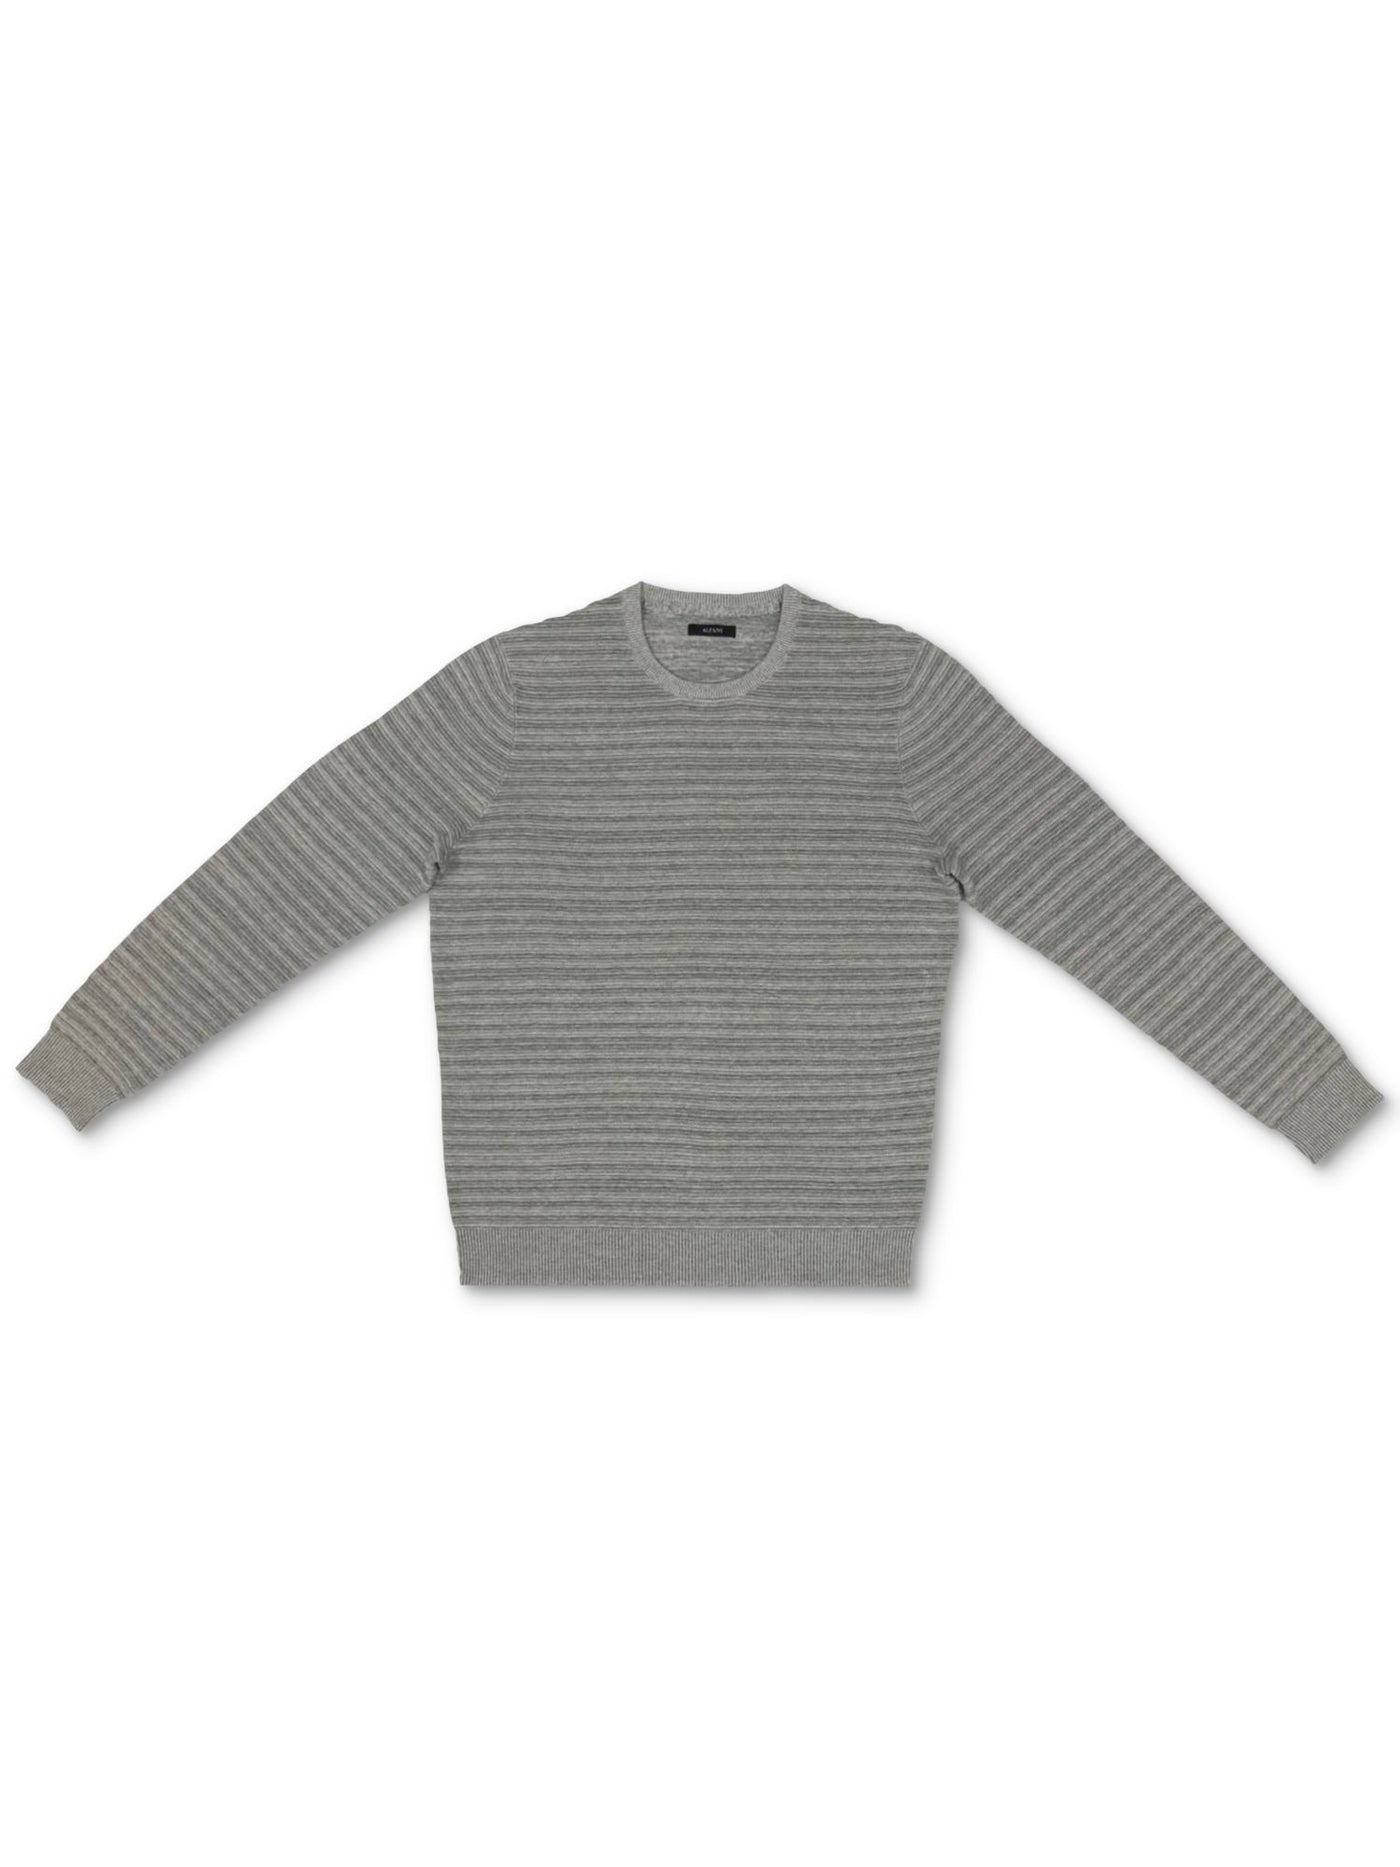 ALFANI Mens Gray Sweater L